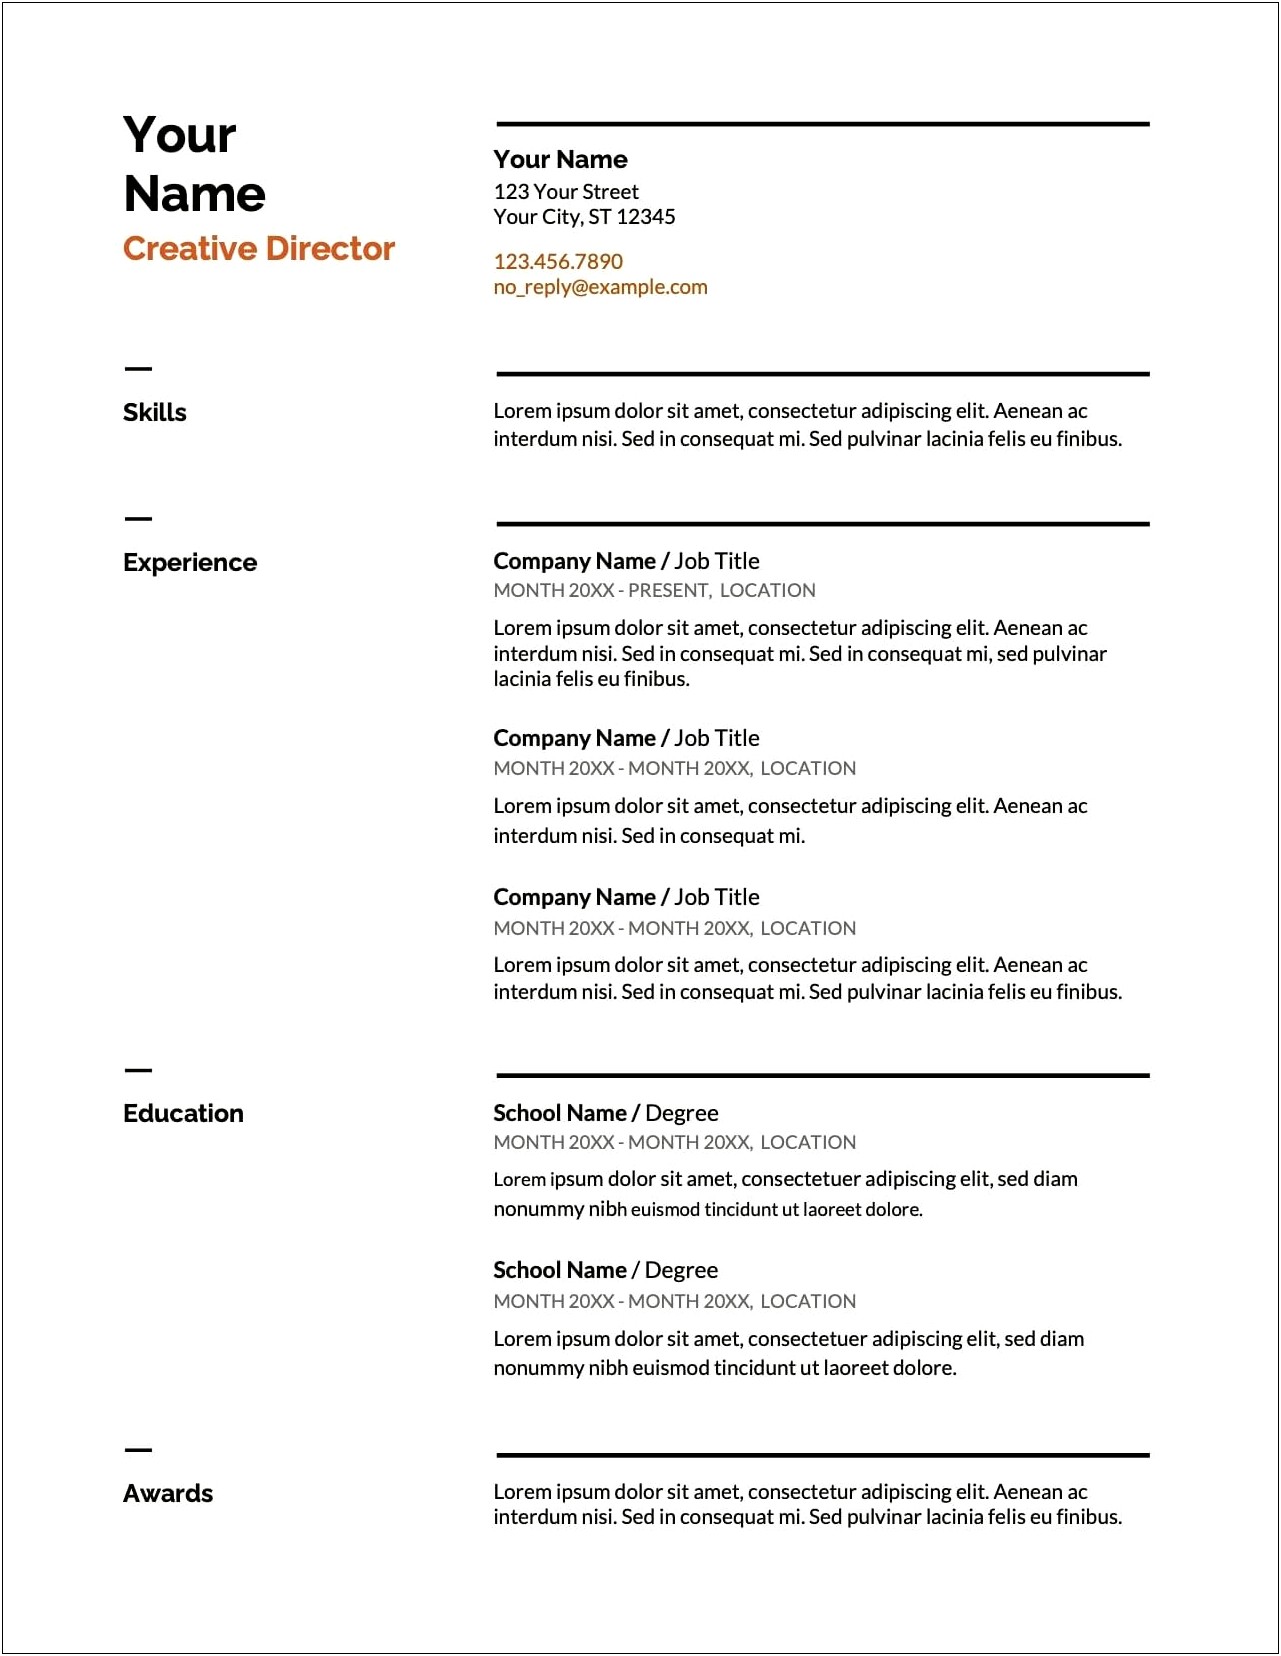 job-cv-template-word-free-download-templates-resume-designs-lxjnowa1pk